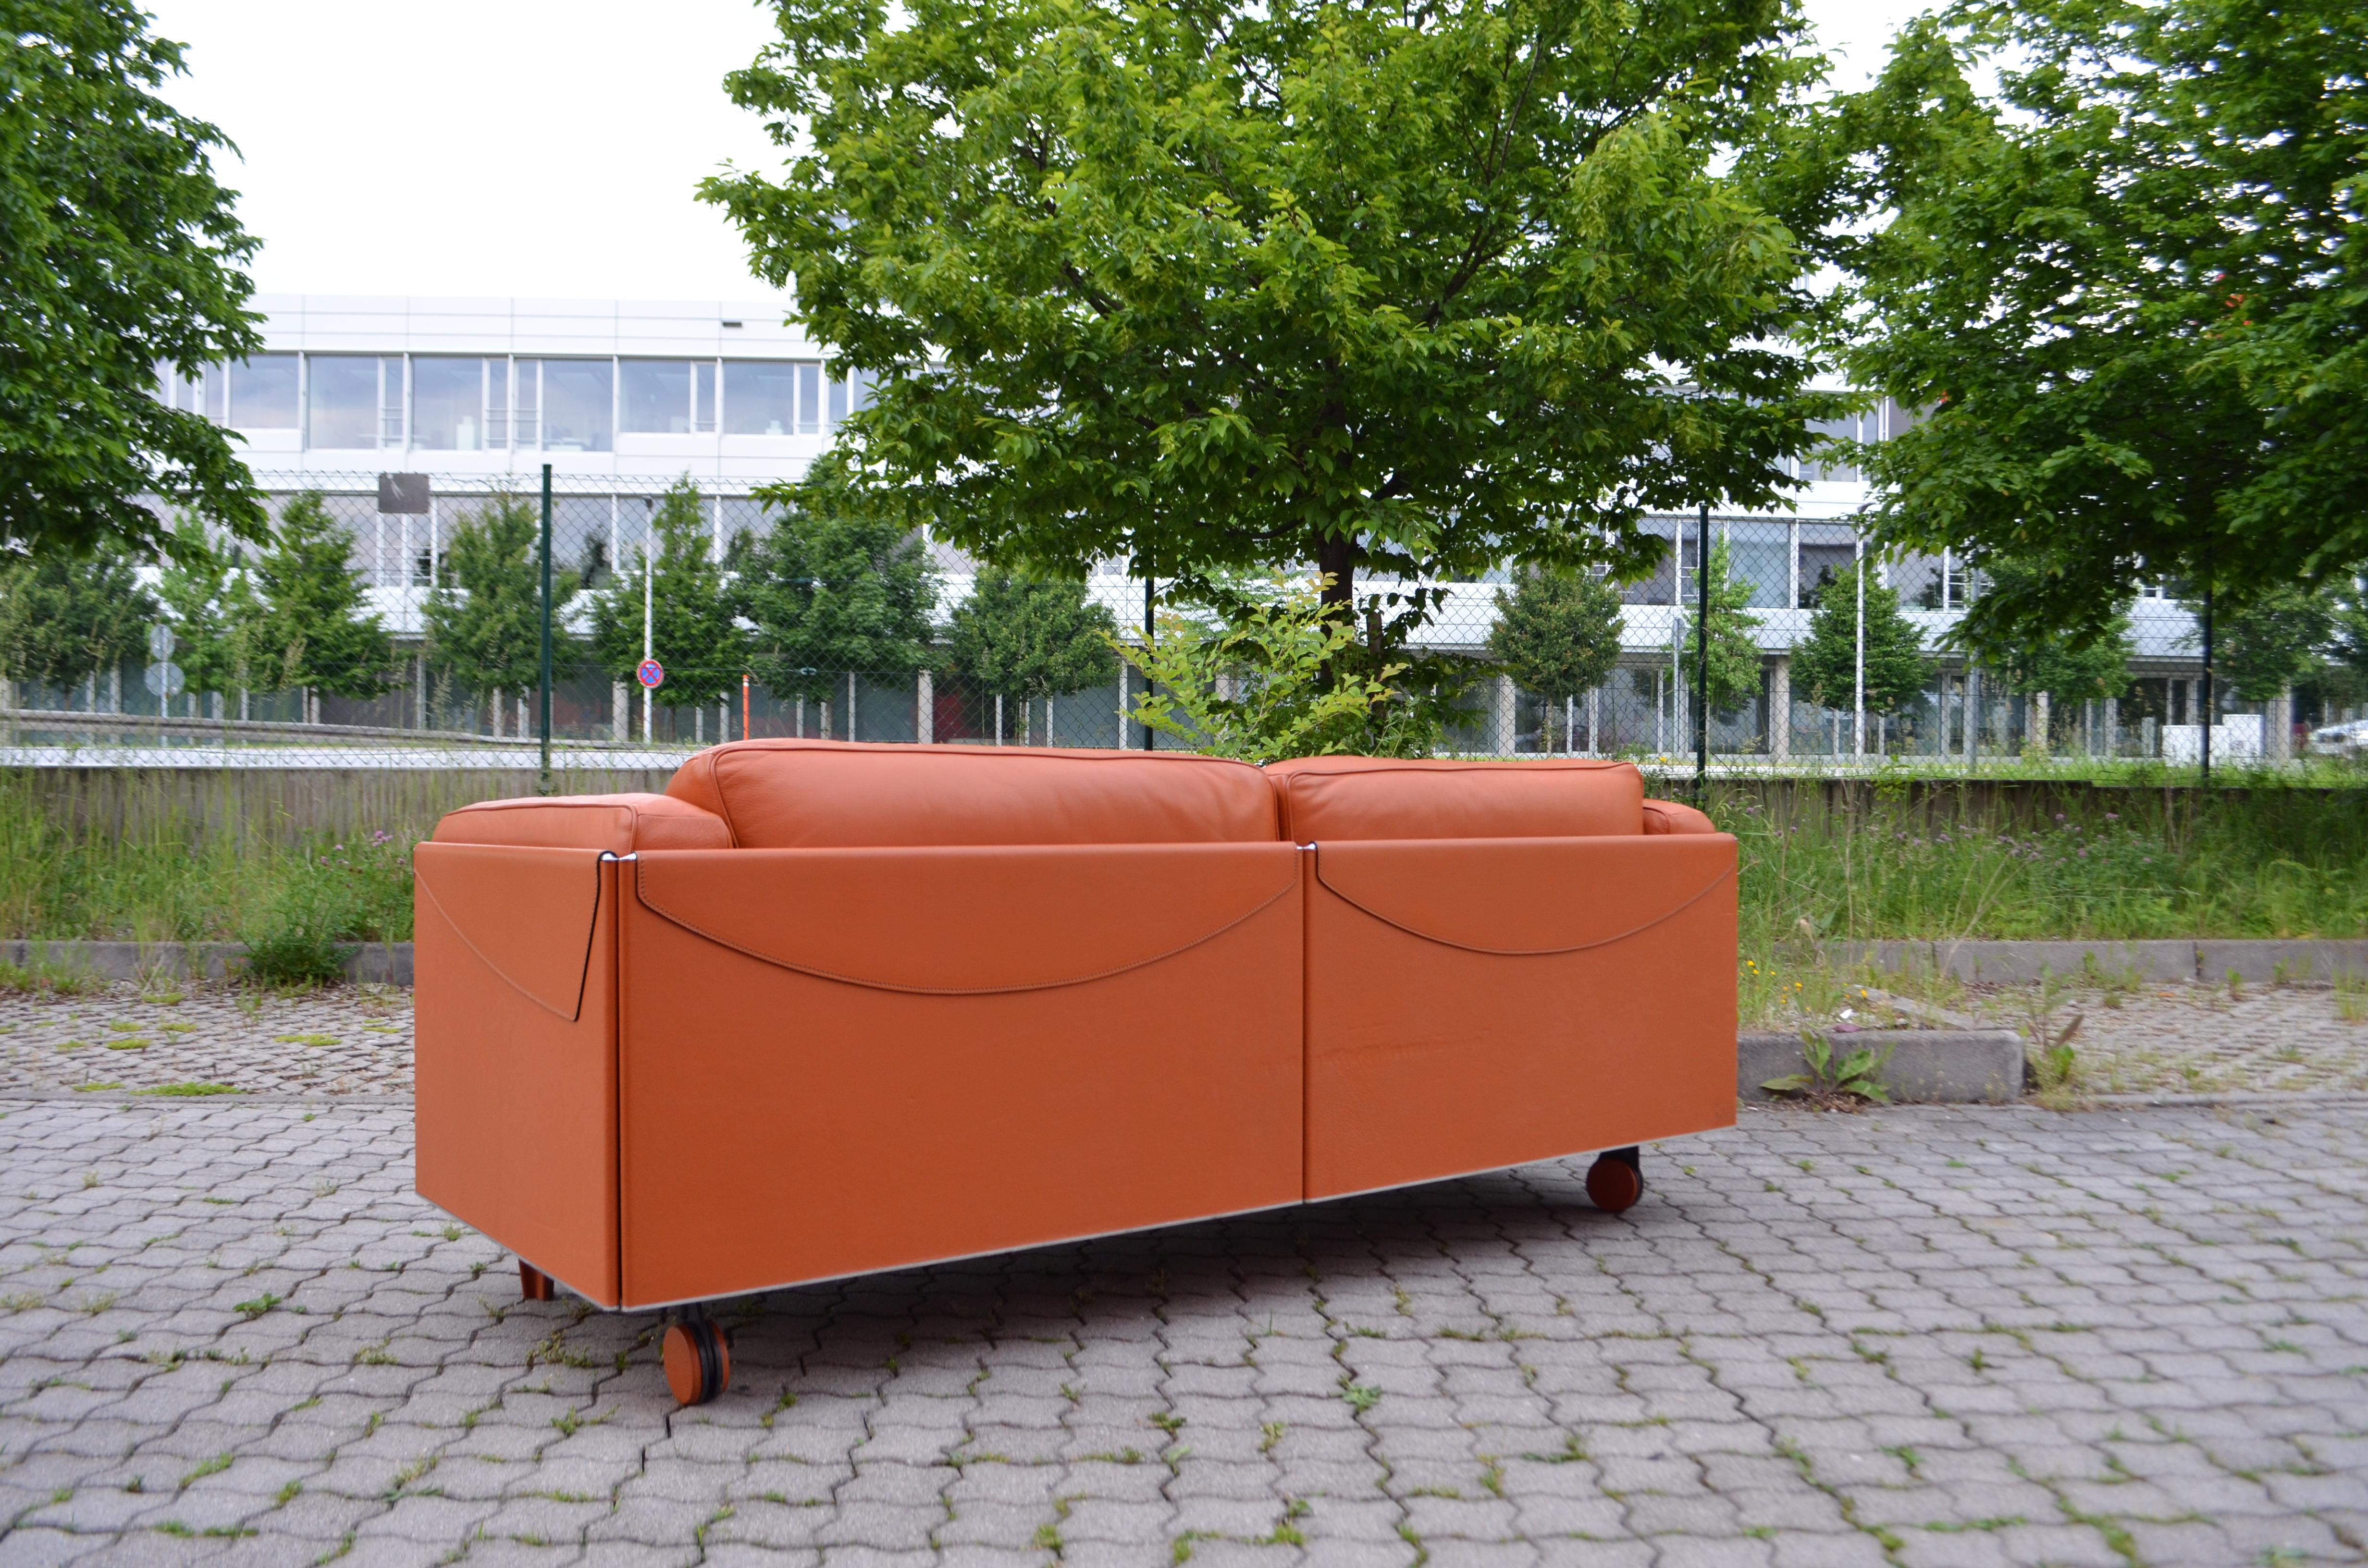 Poltrona Frau Leather Sofa Hermes colour Model Twice by Pierluigi Cerri 8